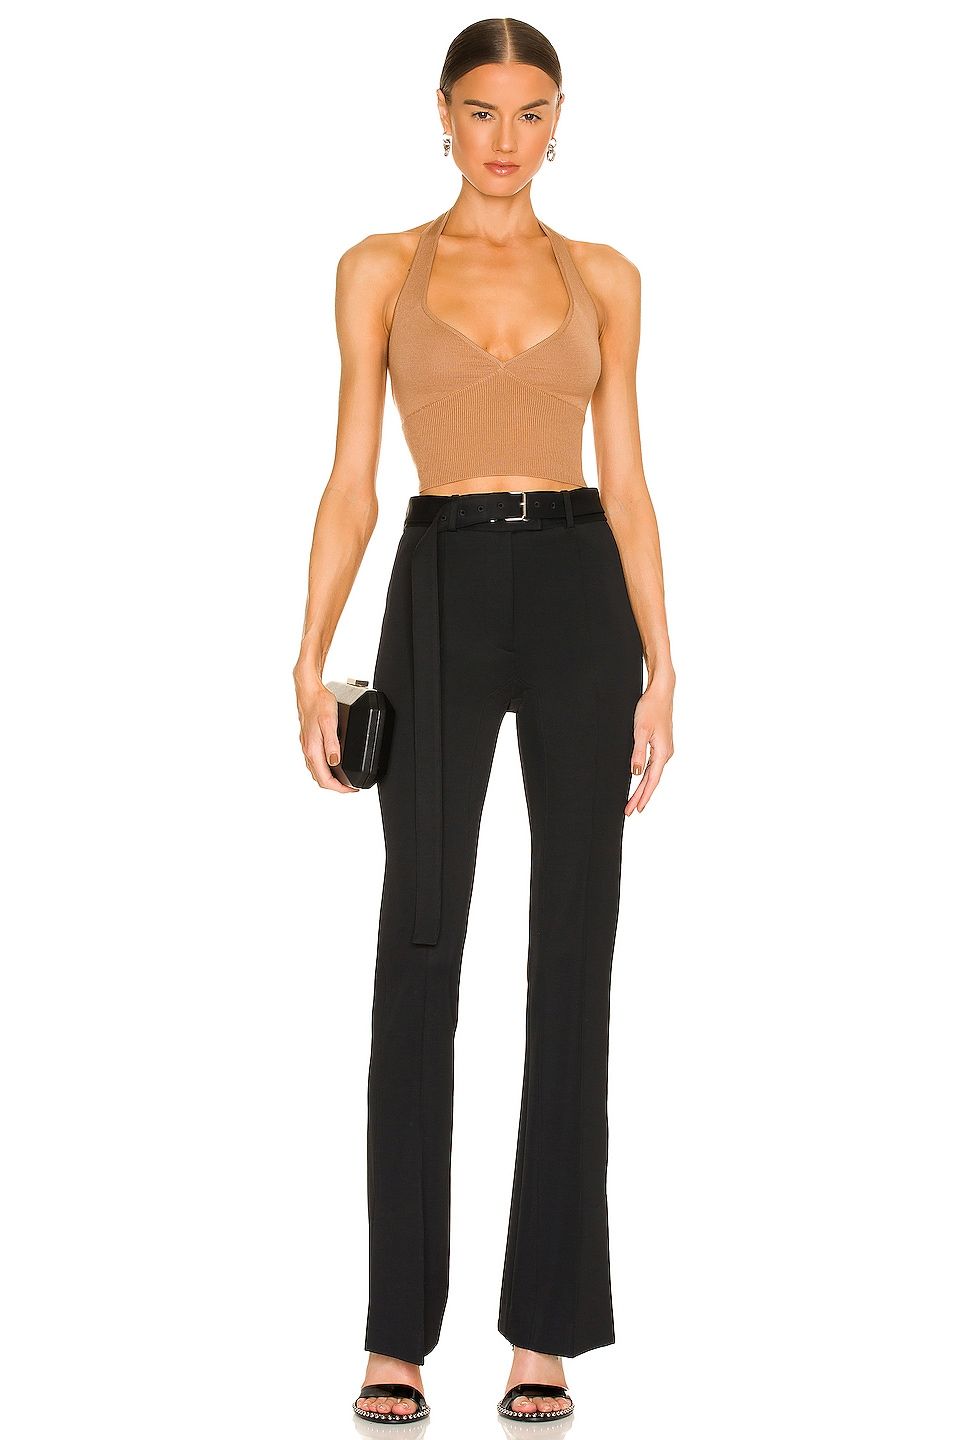 Black Pants Sets Summer Elegant Casual Fashion T-shirts Crop Tops